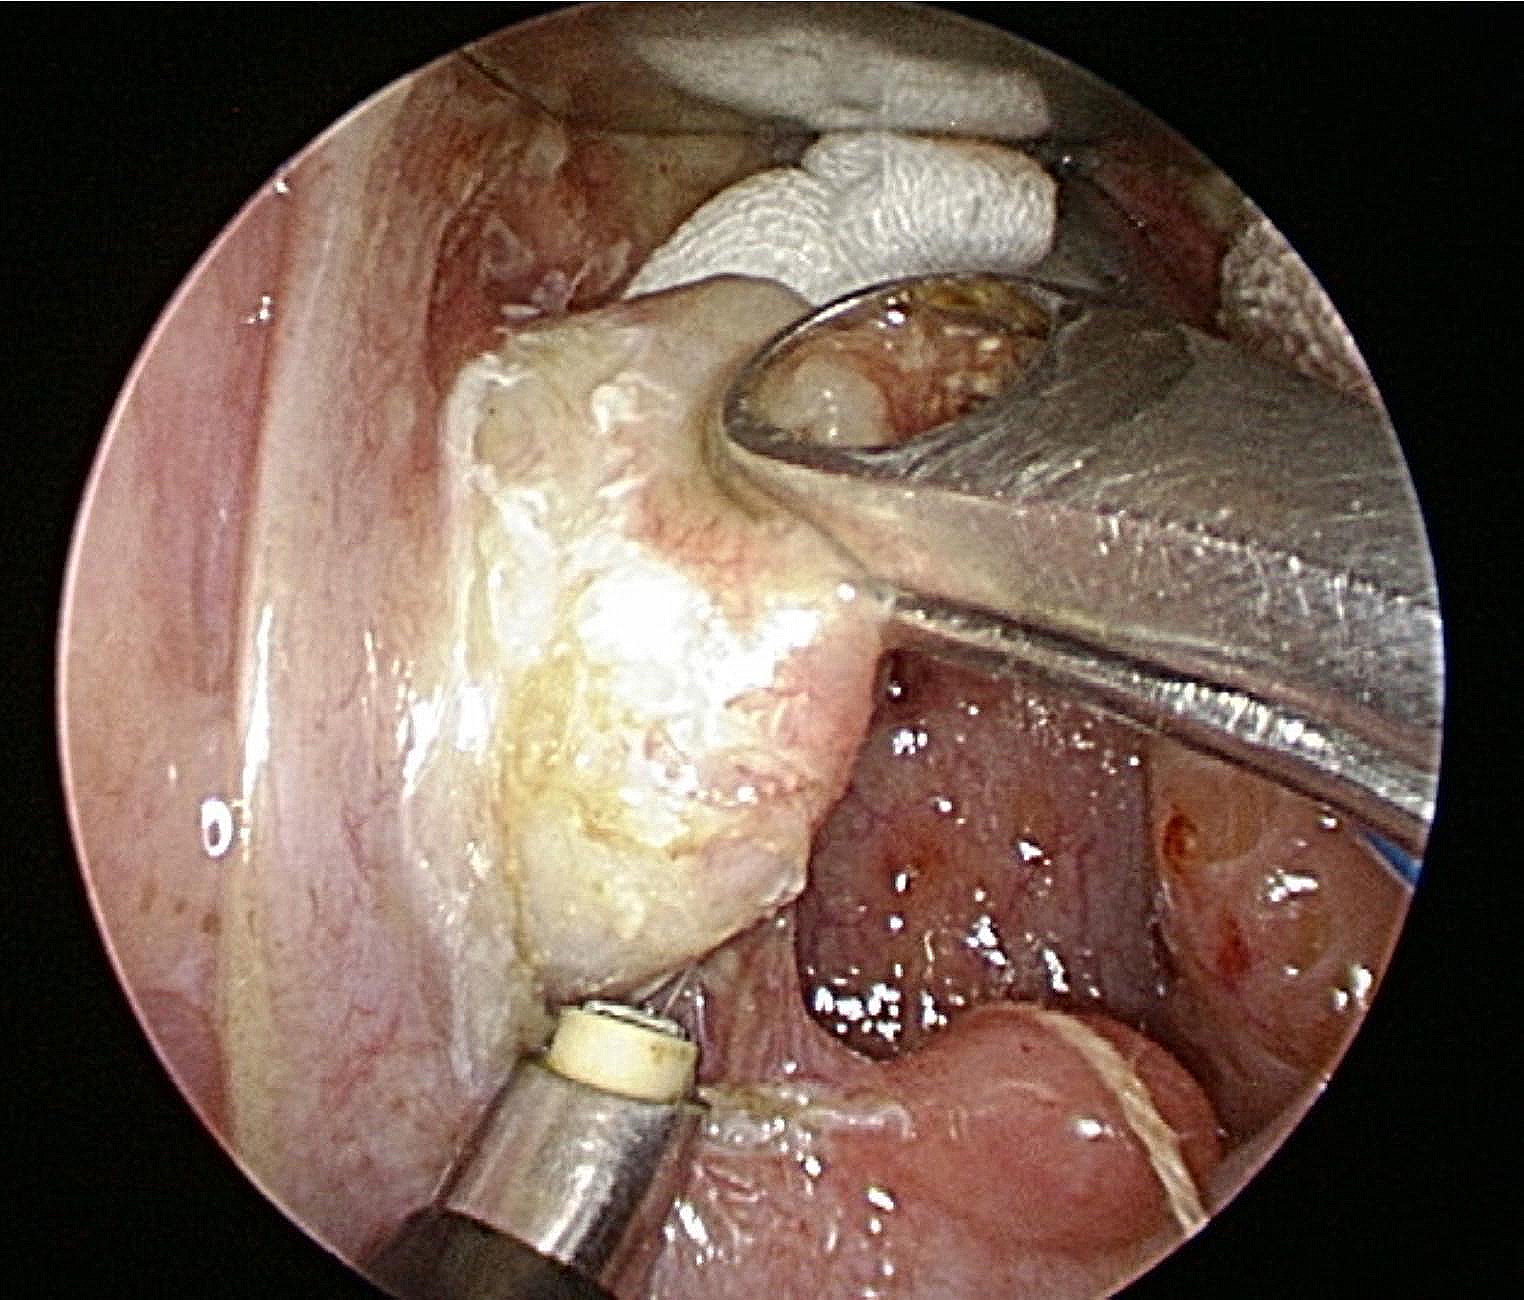 Rare Pathology: Choristoma of the Palatine Tonsil in Otorhinolaryngology